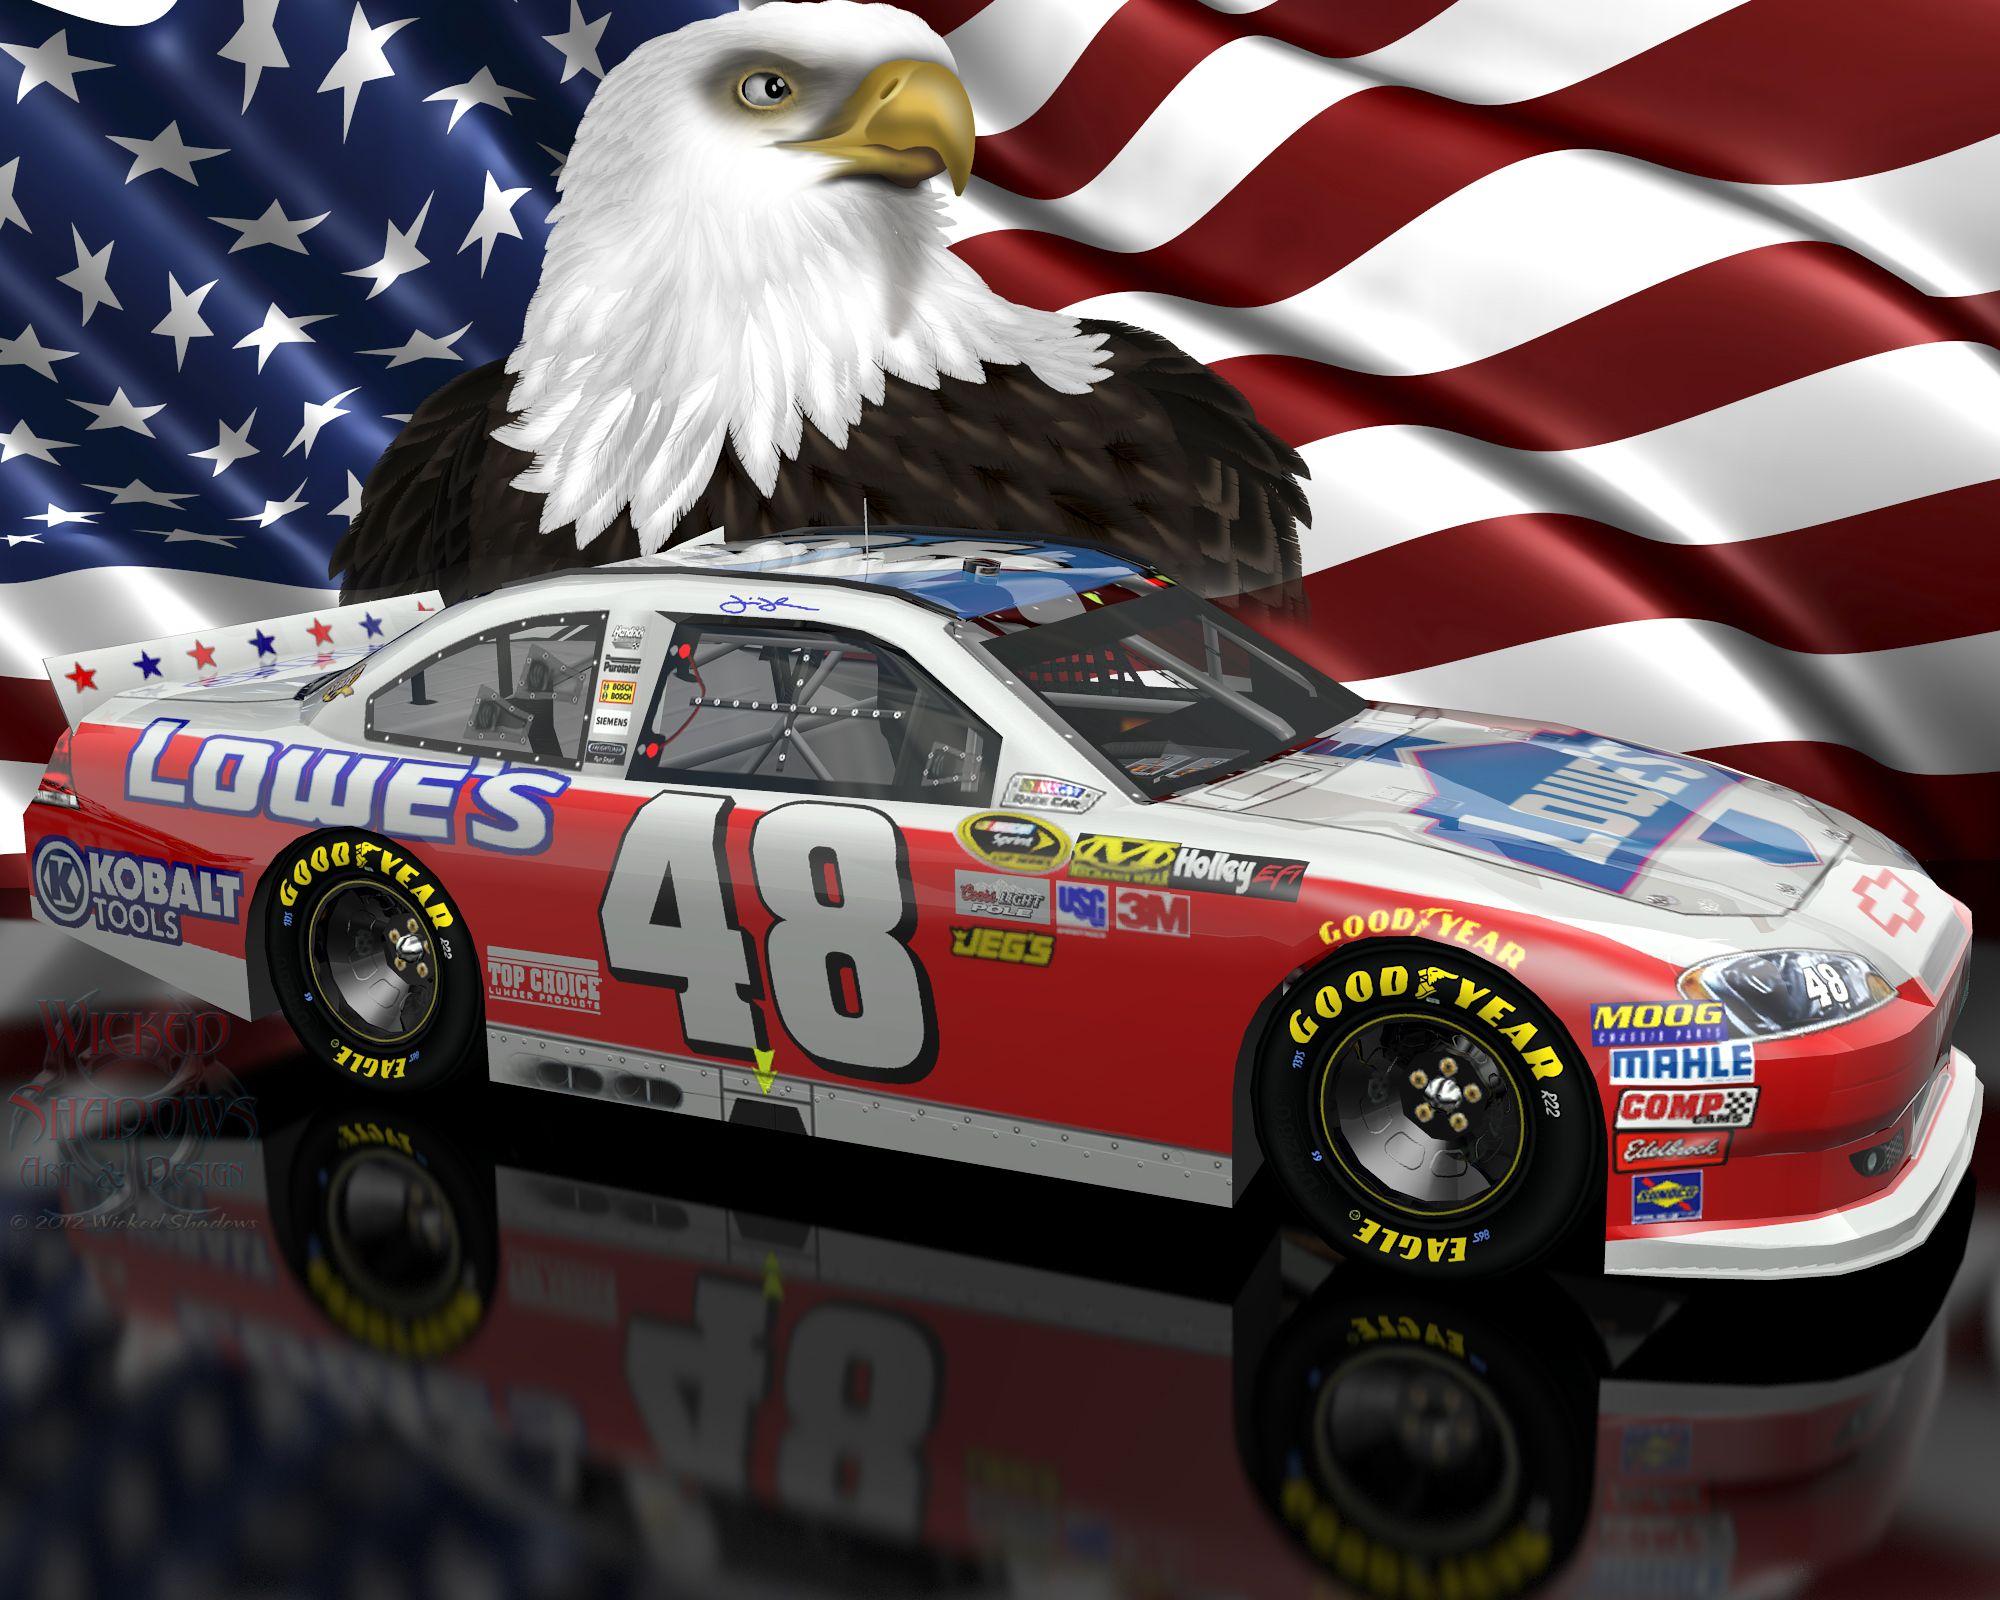 Wallpaper By Wicked Shadows: Jimmie Johnson NASCAR Unites Patriotic